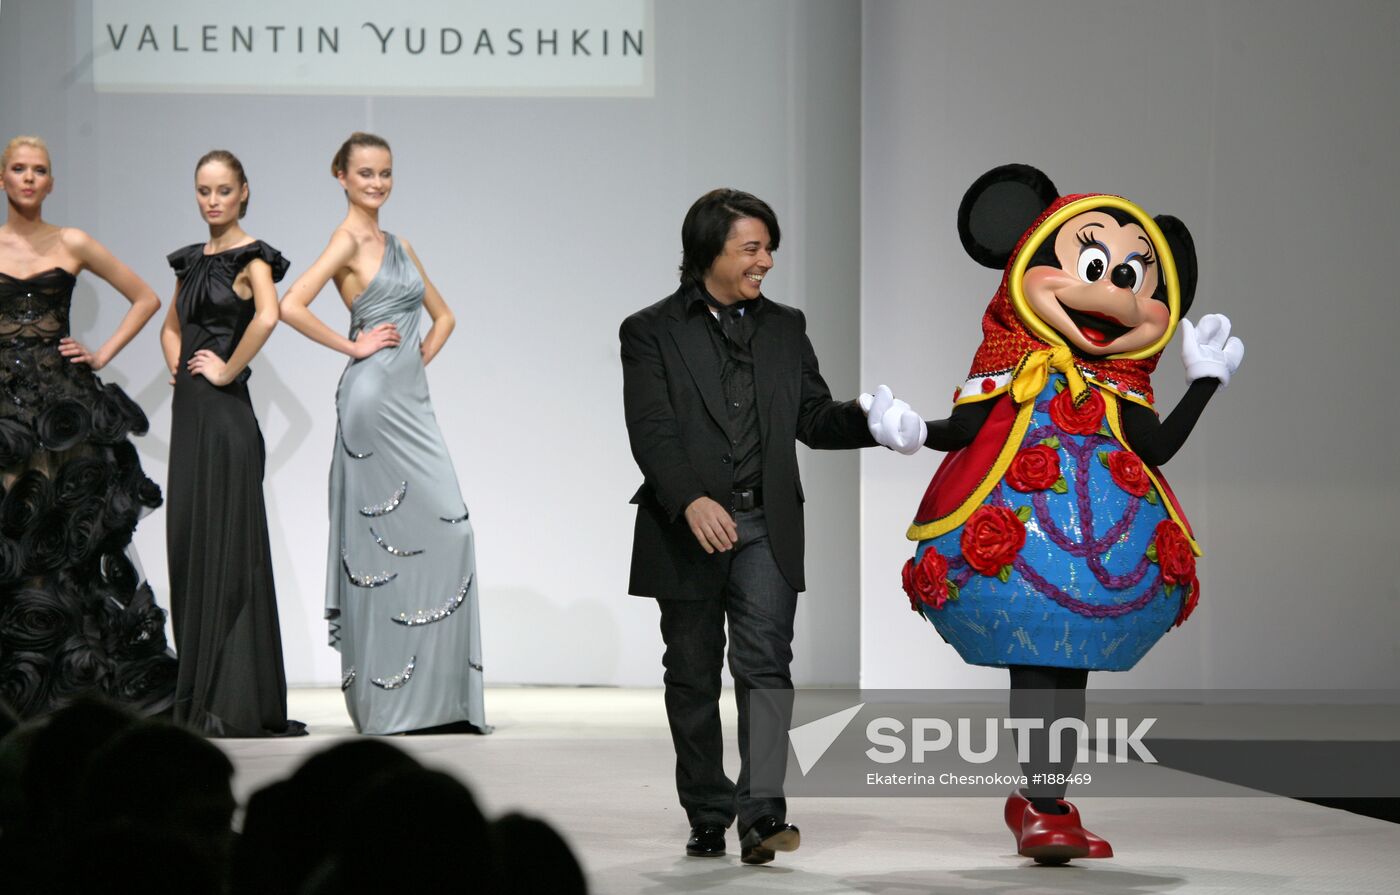 Moscow Fashion Week opening gala